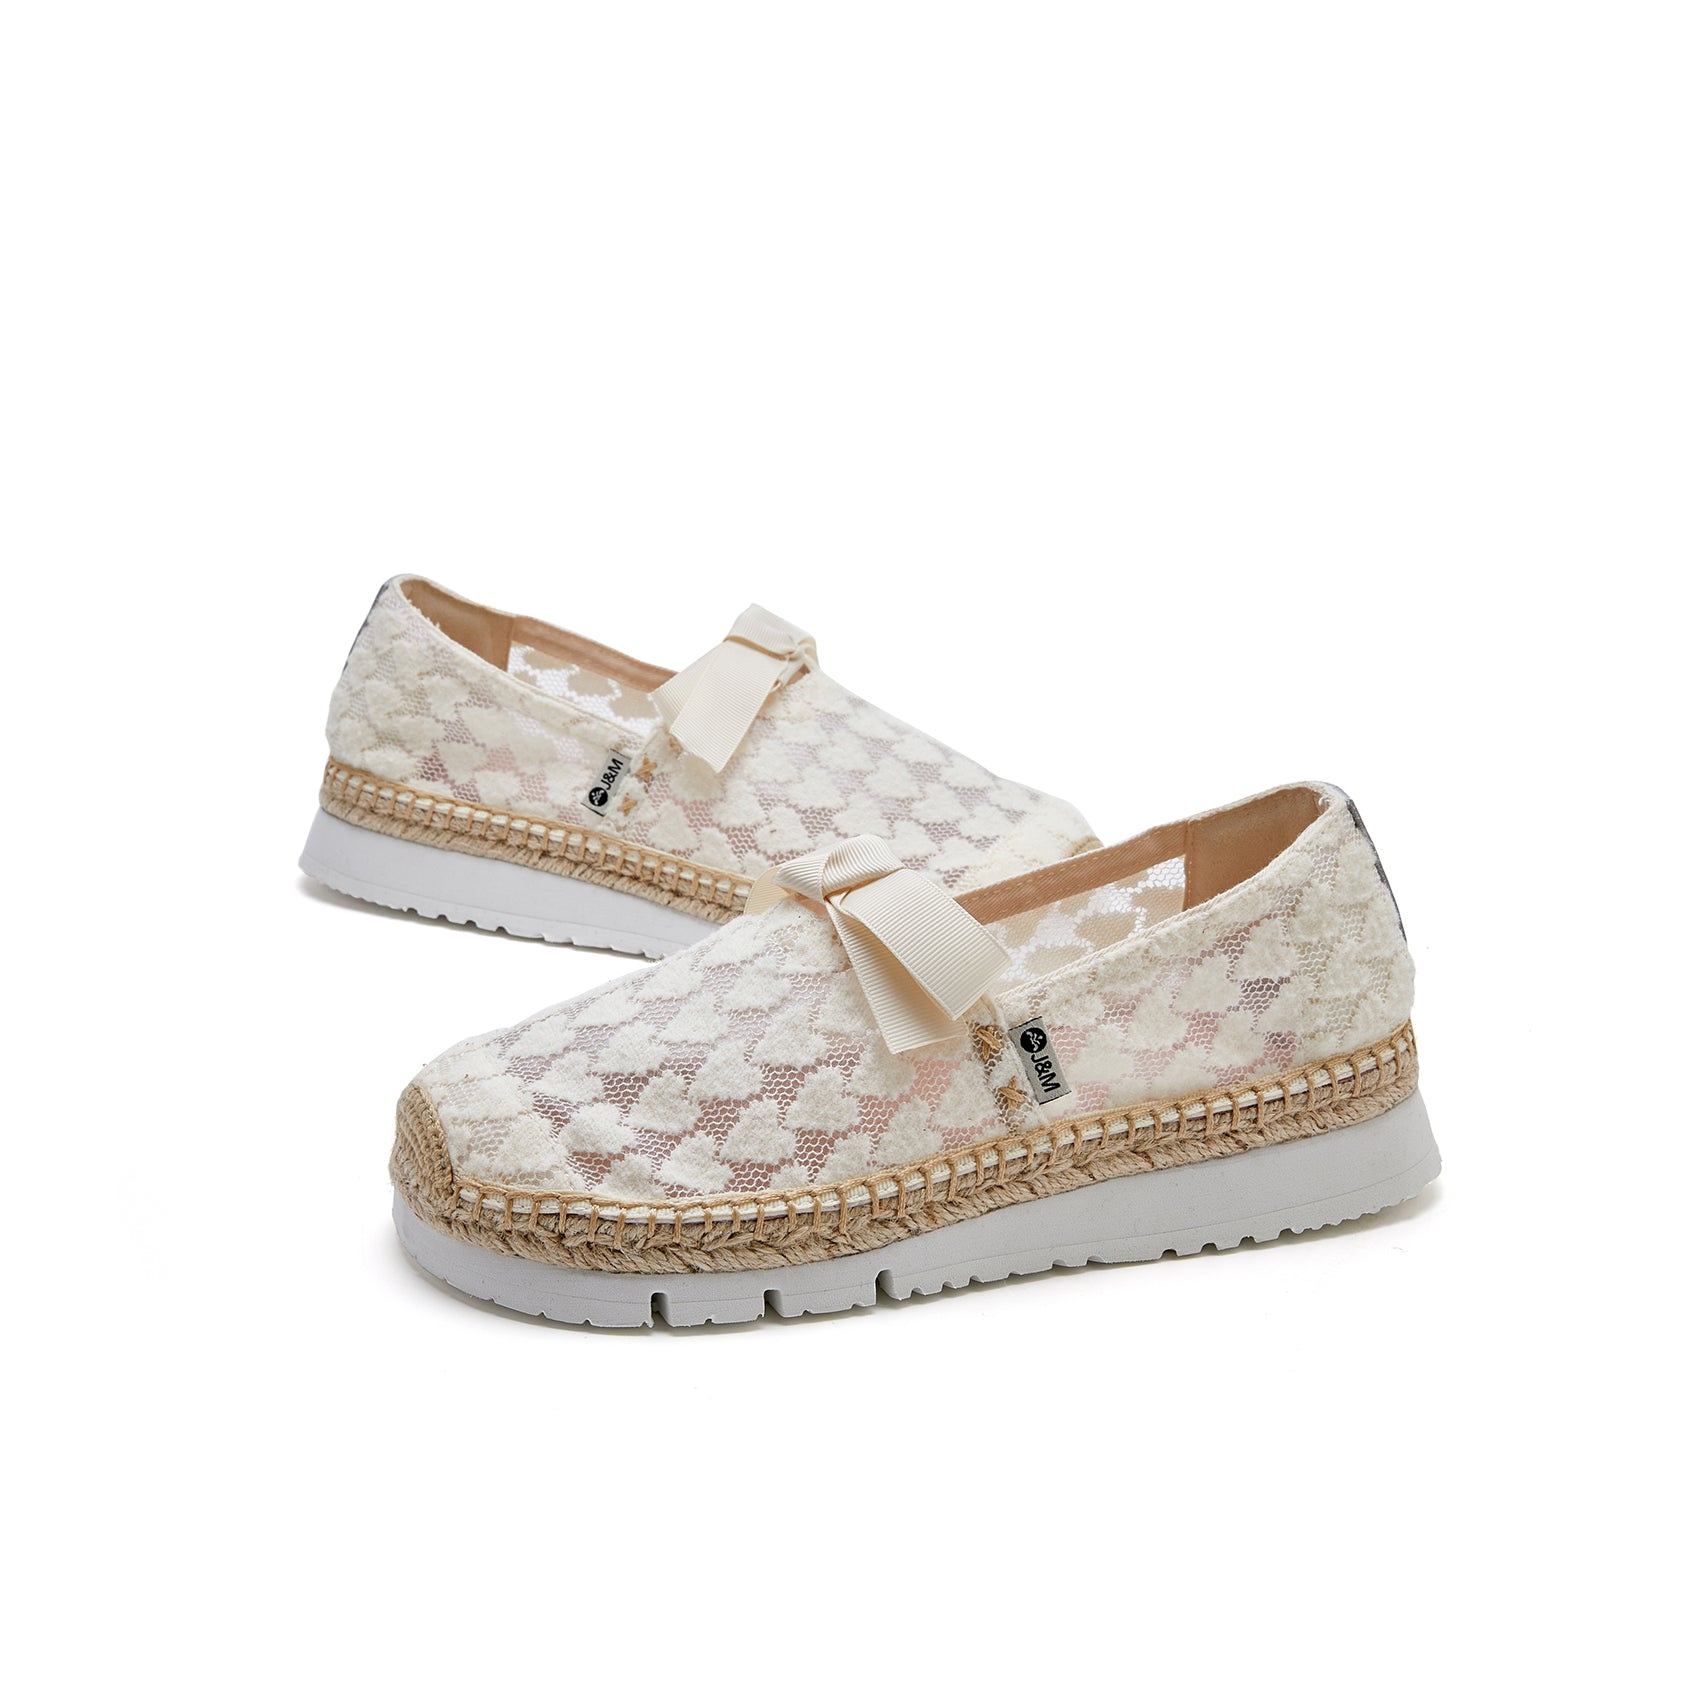 JOY&MARIO Handmade Women’s Slip-On Espadrille Mesh Loafers in White-57371W